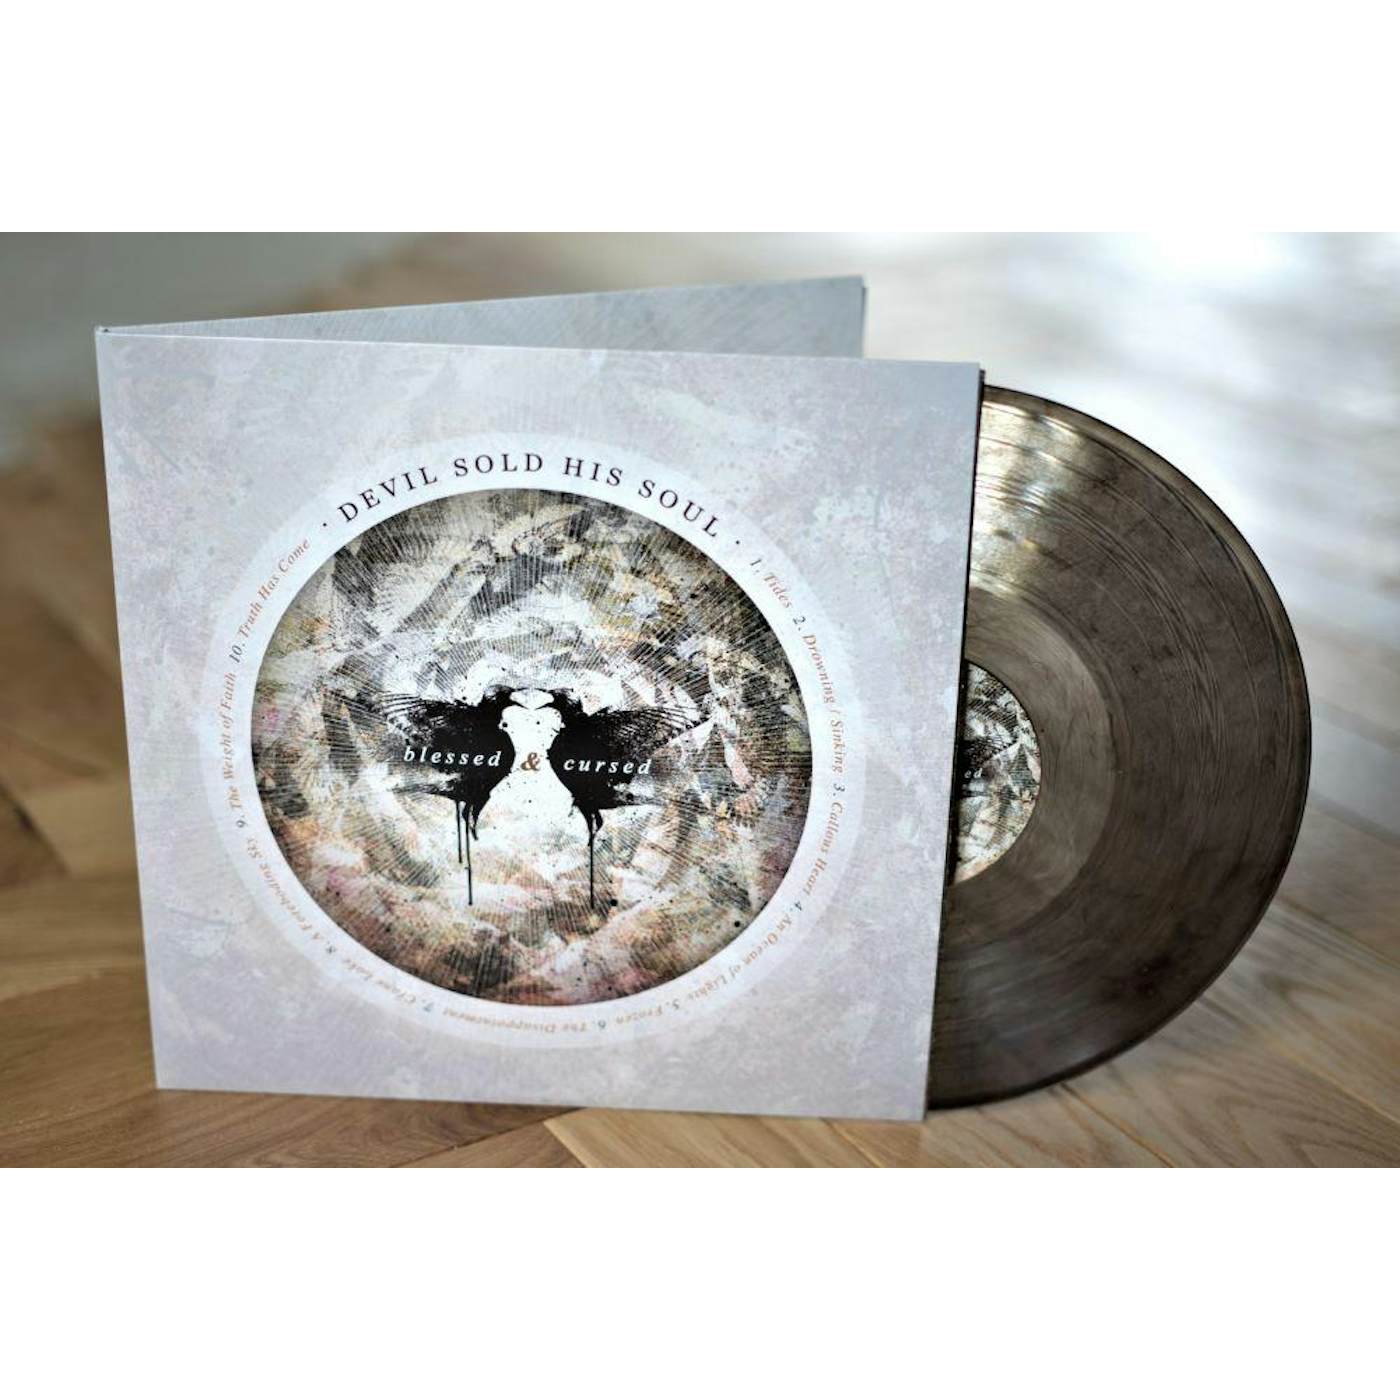 Devil Sold His Soul Blessed & Cursed - 10th Anniversary (Ltd Edition Marble Vinyl Gatefold 2LP)